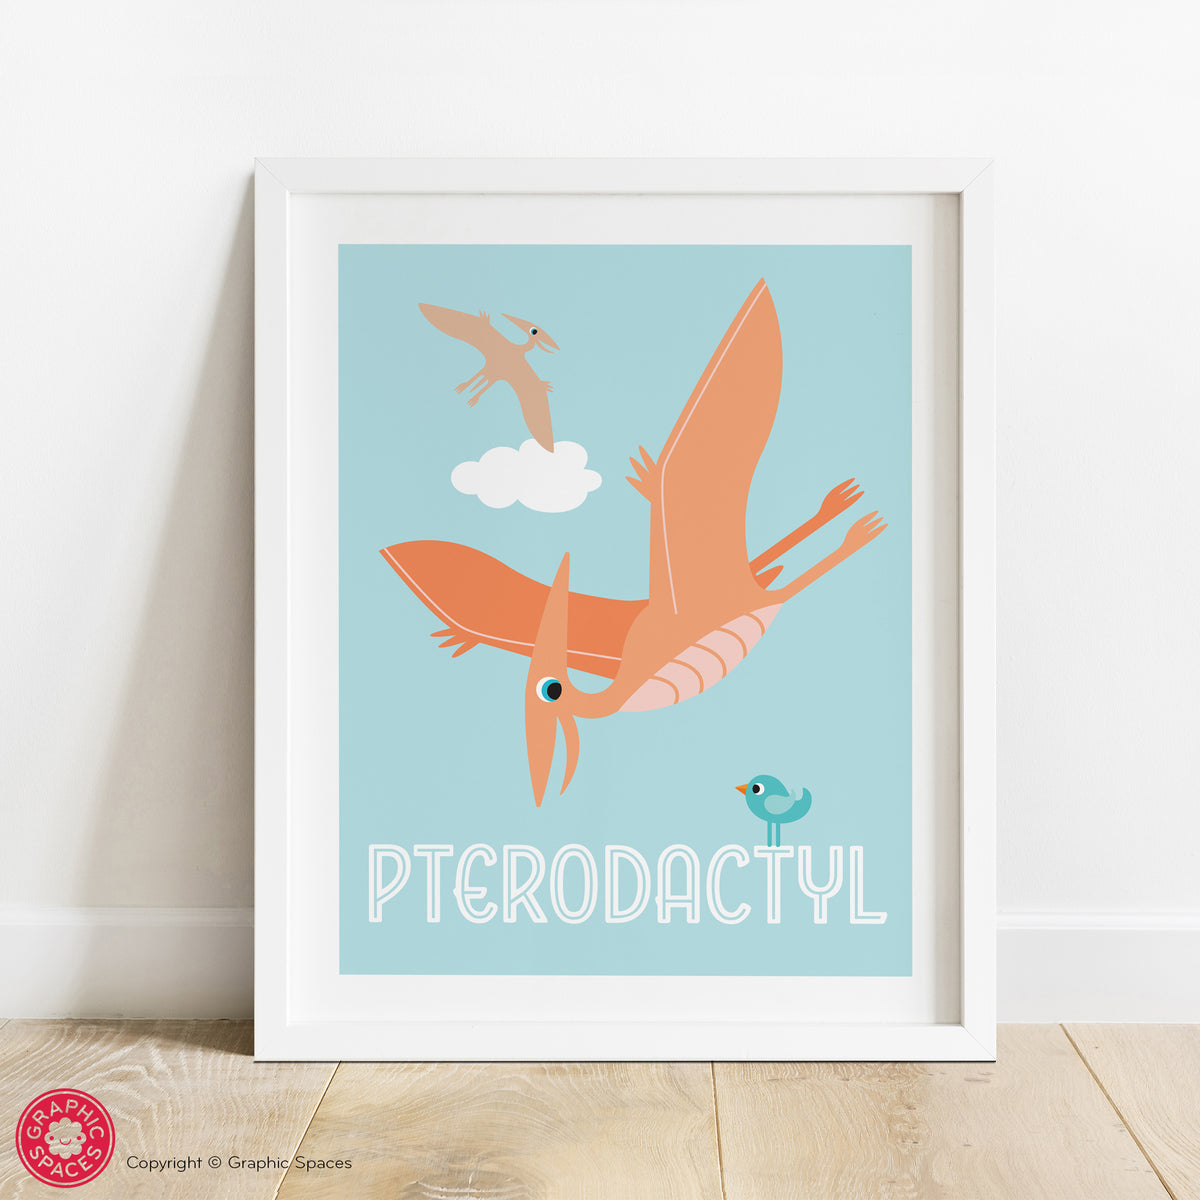 Pterodactyl nursery art print.